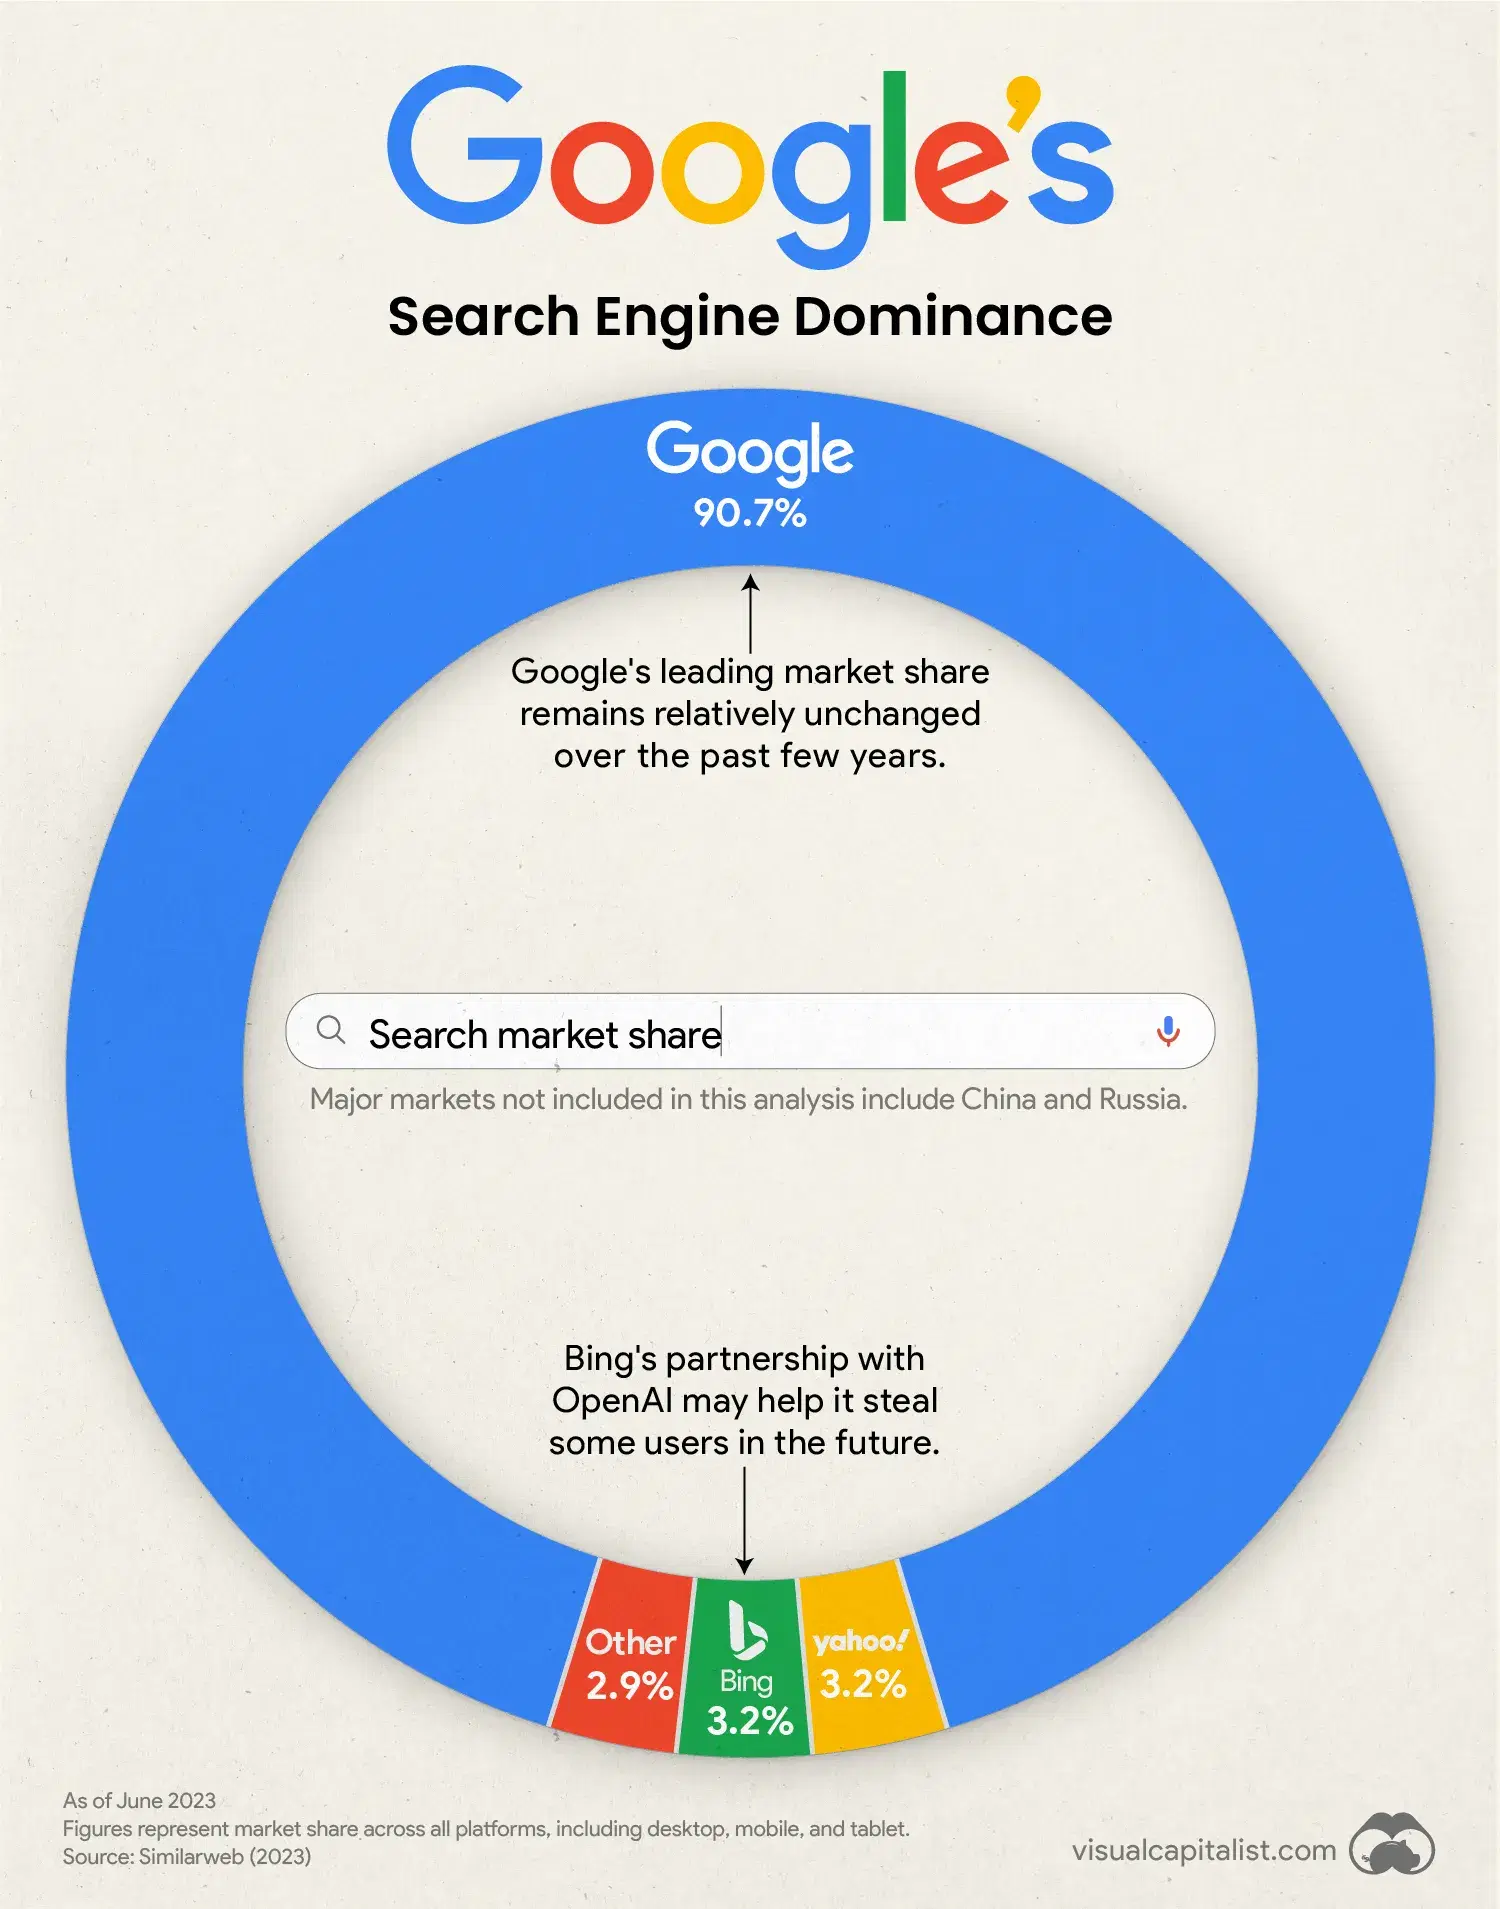 Visualizing Google’s Search Engine Dominance